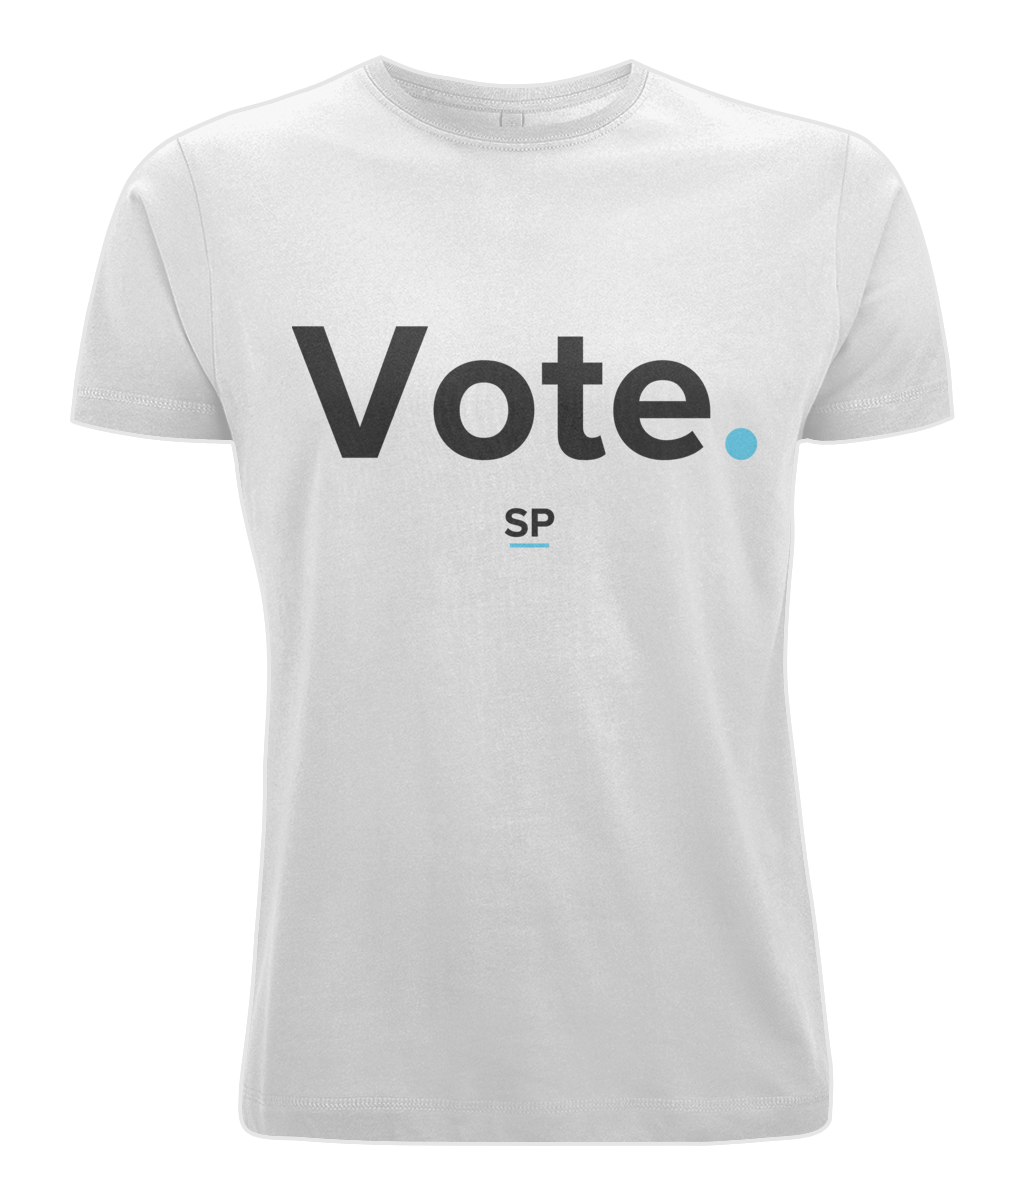 Vote. T-shirt!